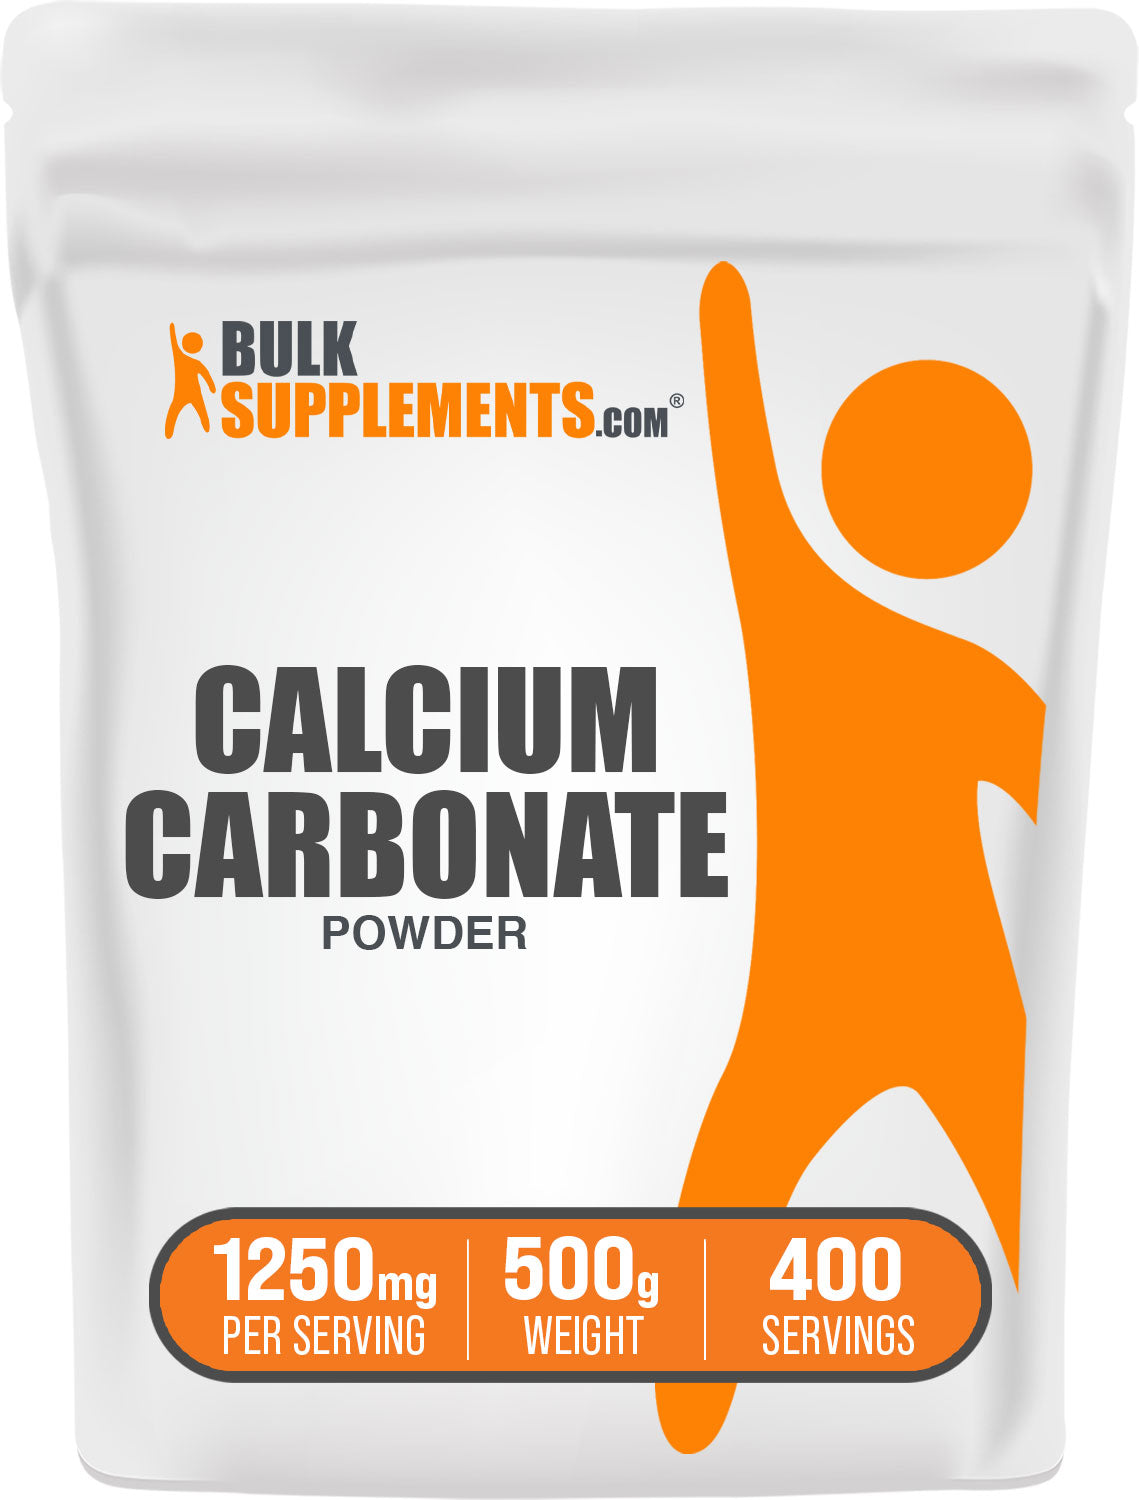 BulkSupplements.com Calcium Carbonate powder 500g bag